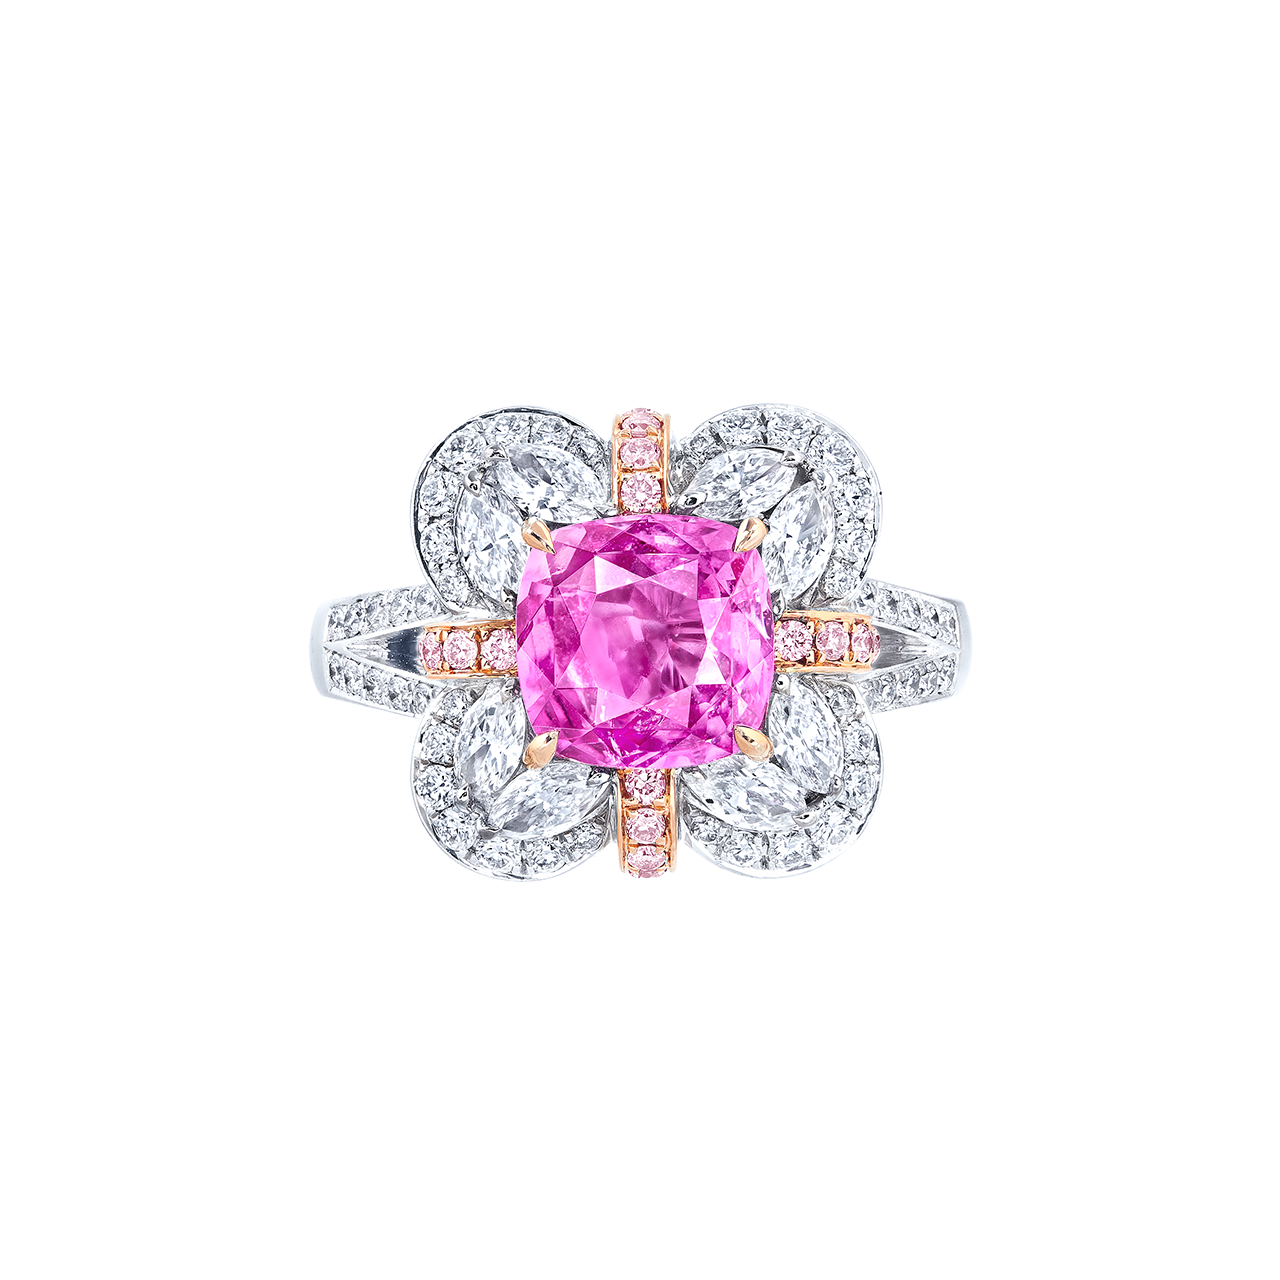 2.67克拉 天然無燒粉剛鑽戒
Pink Sapphire and Diamond Ring